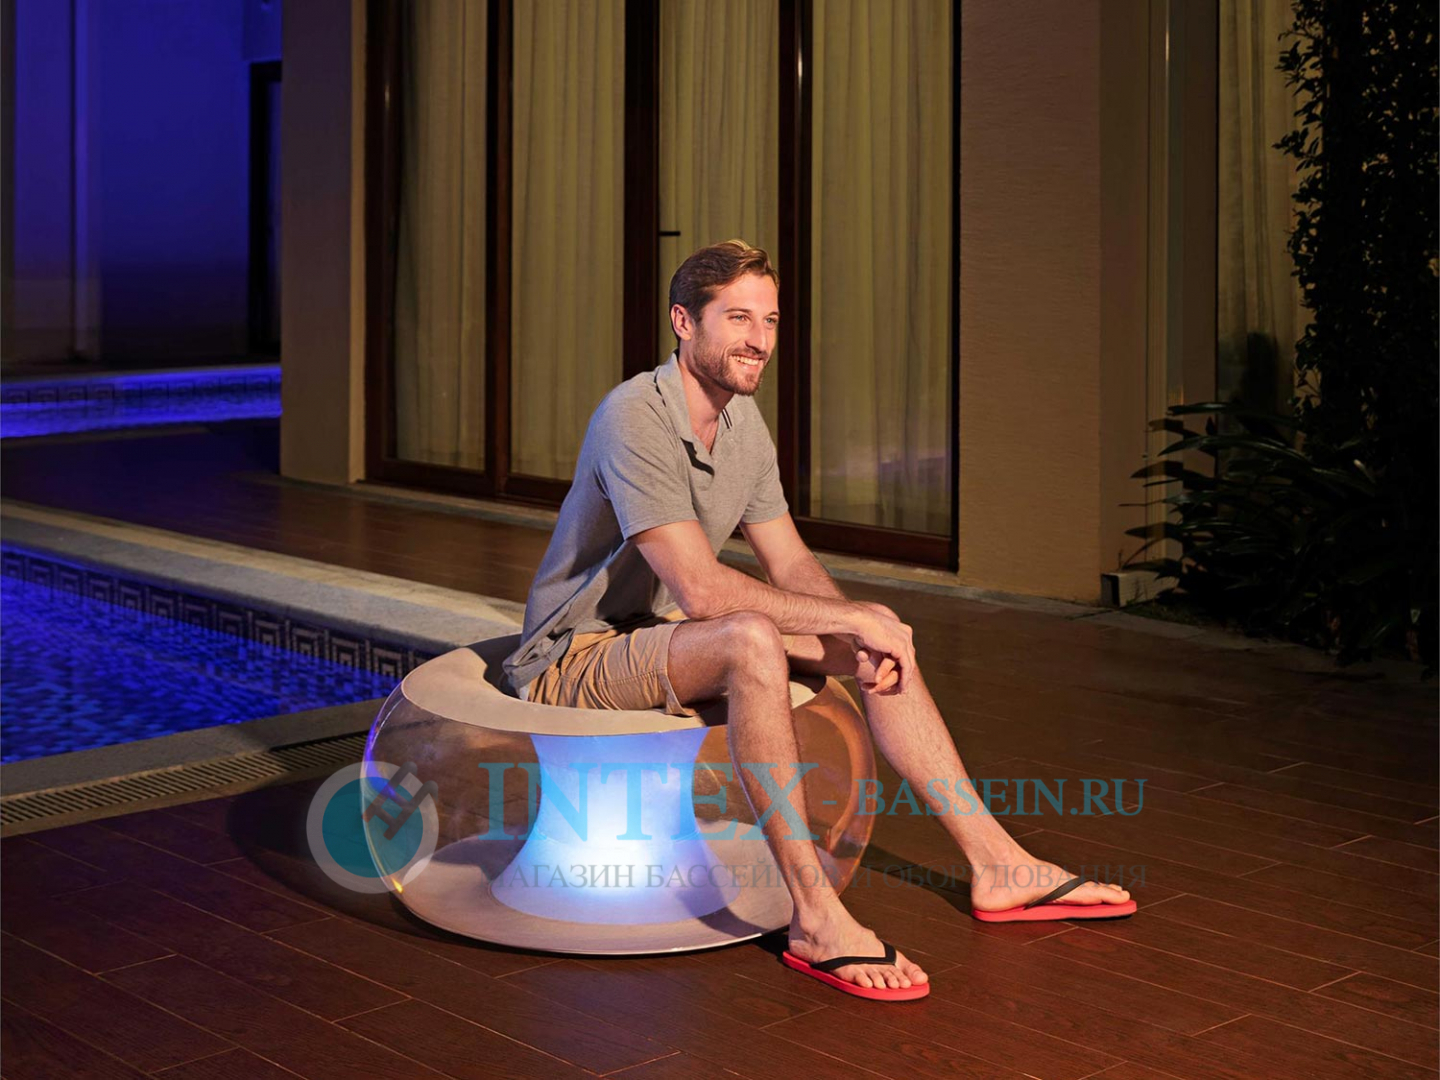 Надувное кресло Bestway "Poolsphere" с Led подсветкой на батарейках (3хААА) 82 x 82 x 41 см, артикул 75085